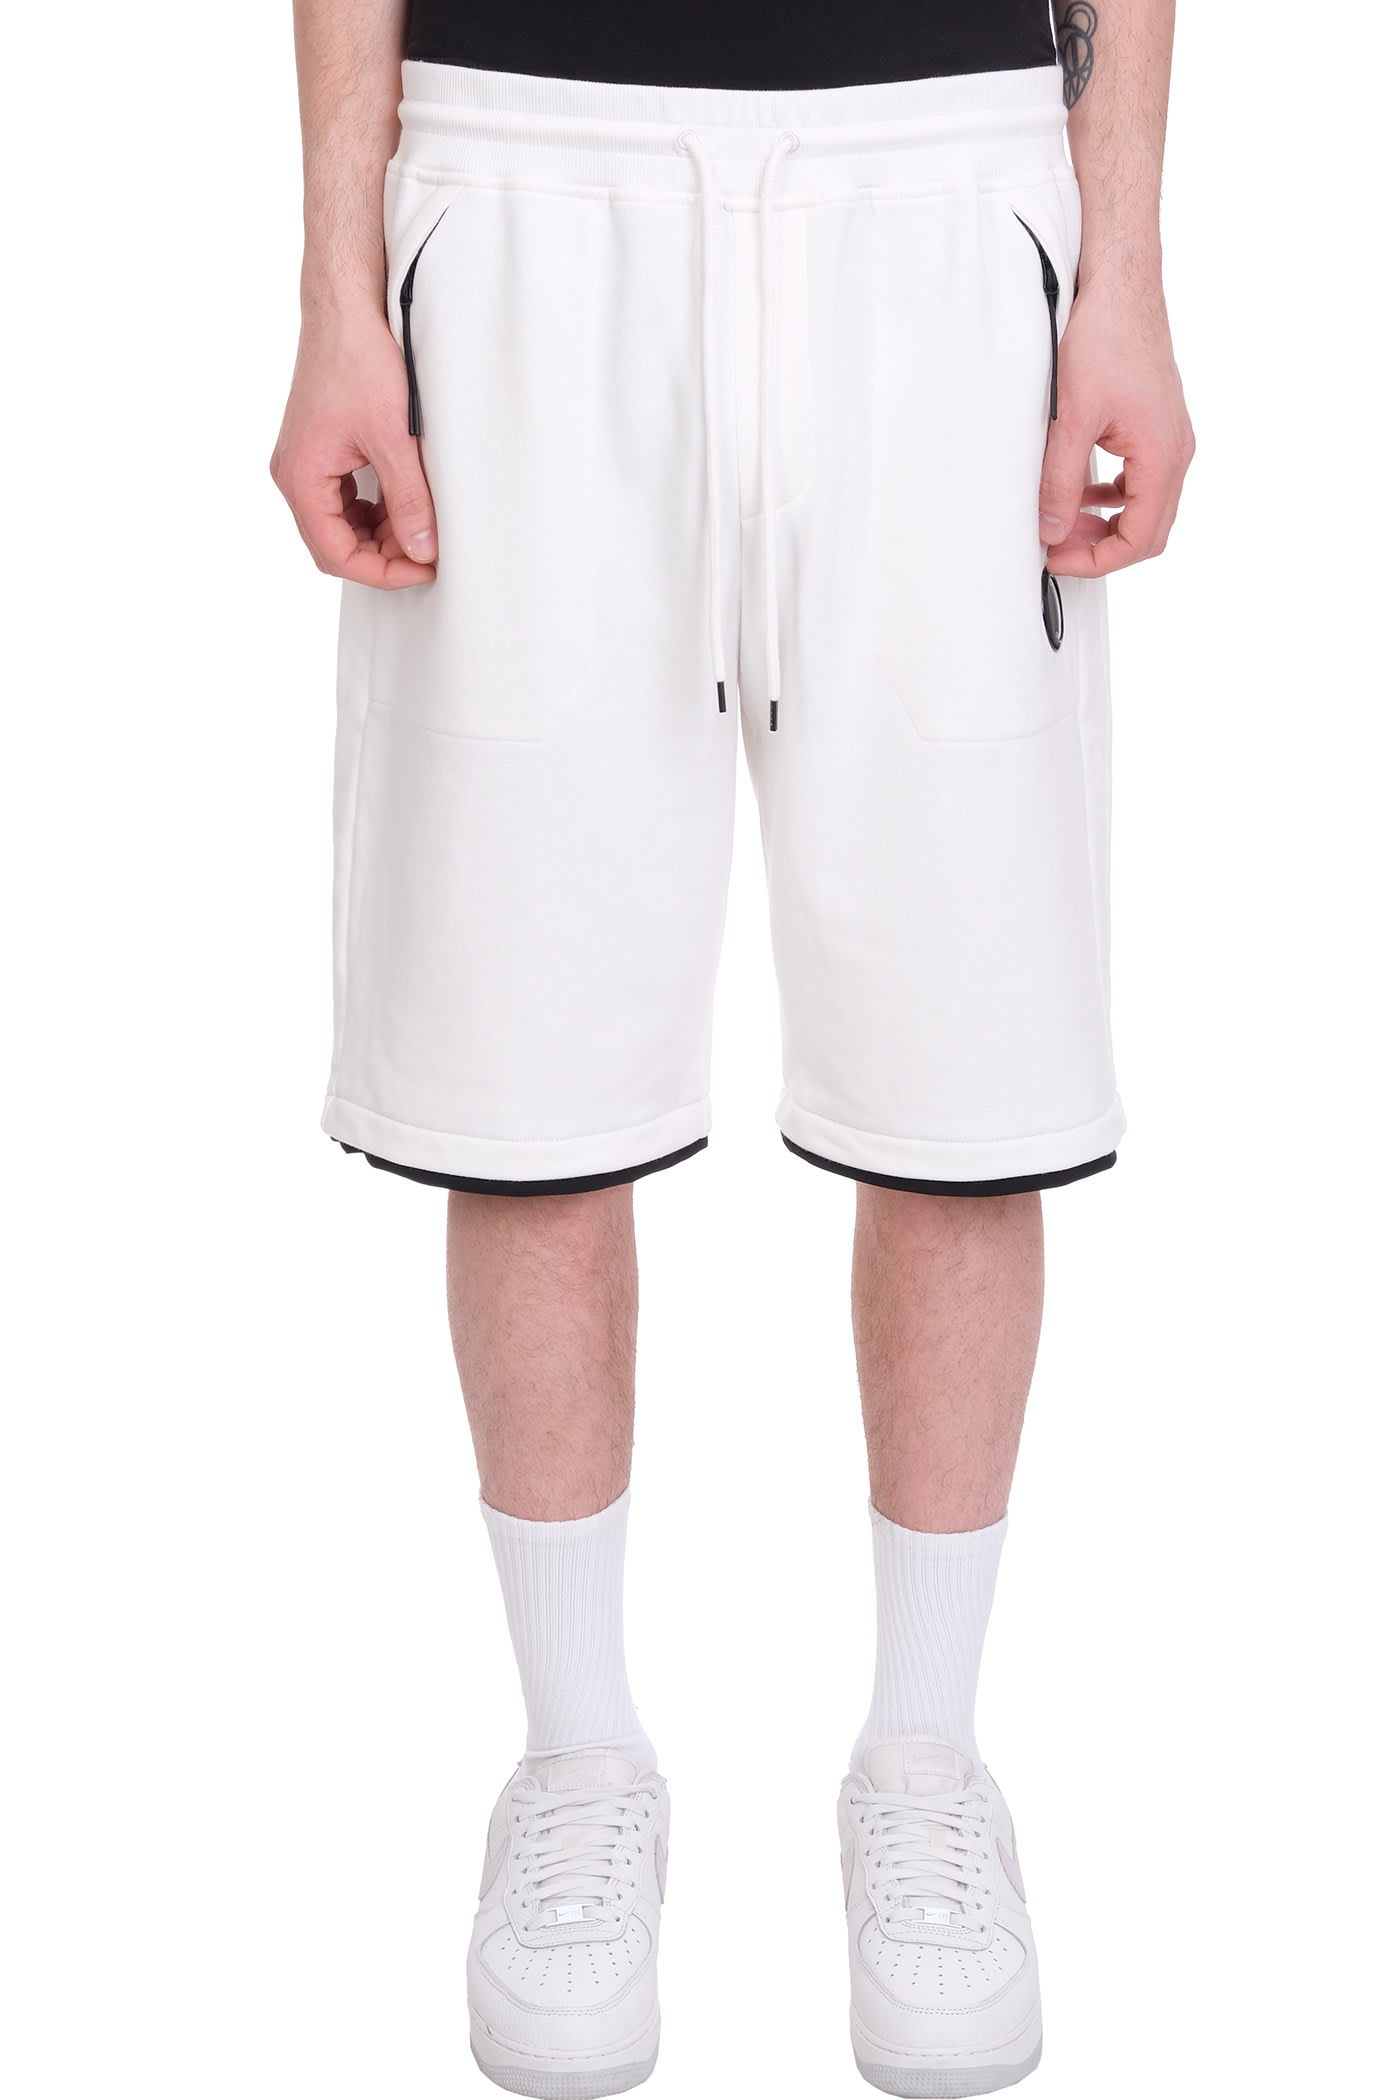 C.P. Company Shorts In White Cotton